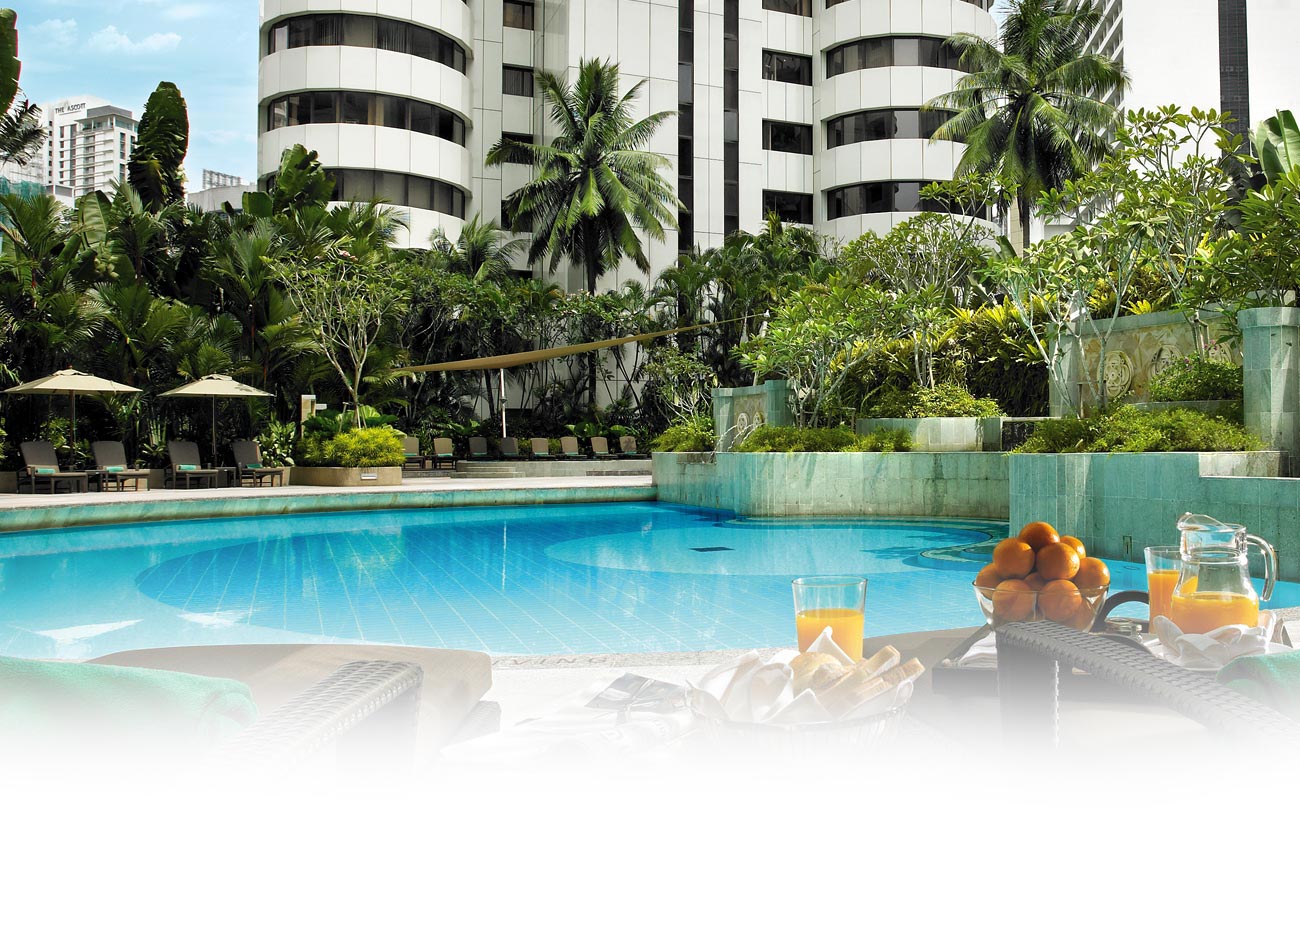 Fitness Center, Gym, Health Club in Kuala Lumpur | Shangri-La Hotel - Gym With Swimming Pool Kuala Lumpur